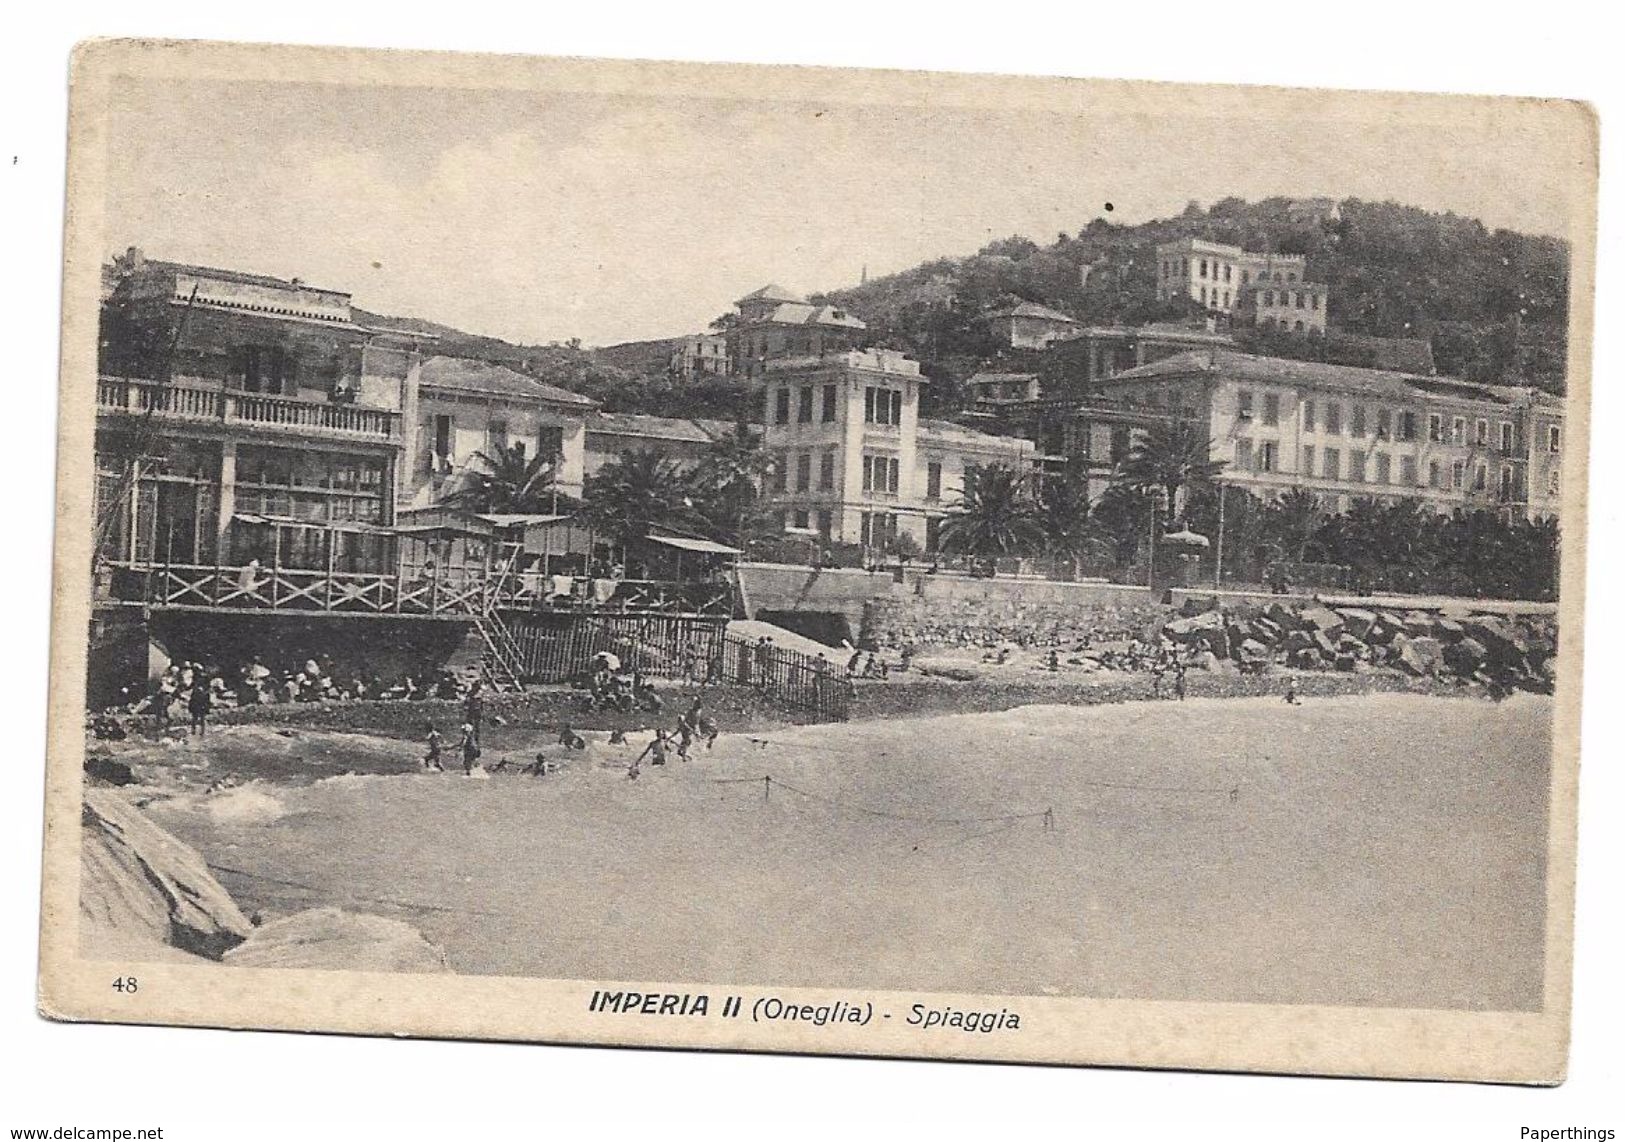 Old Postcard, Italy, 48 Oneglia Imperia 11 - Spiaggia, Beach Seaside Scene, Shops, Buildings, People. - Imperia